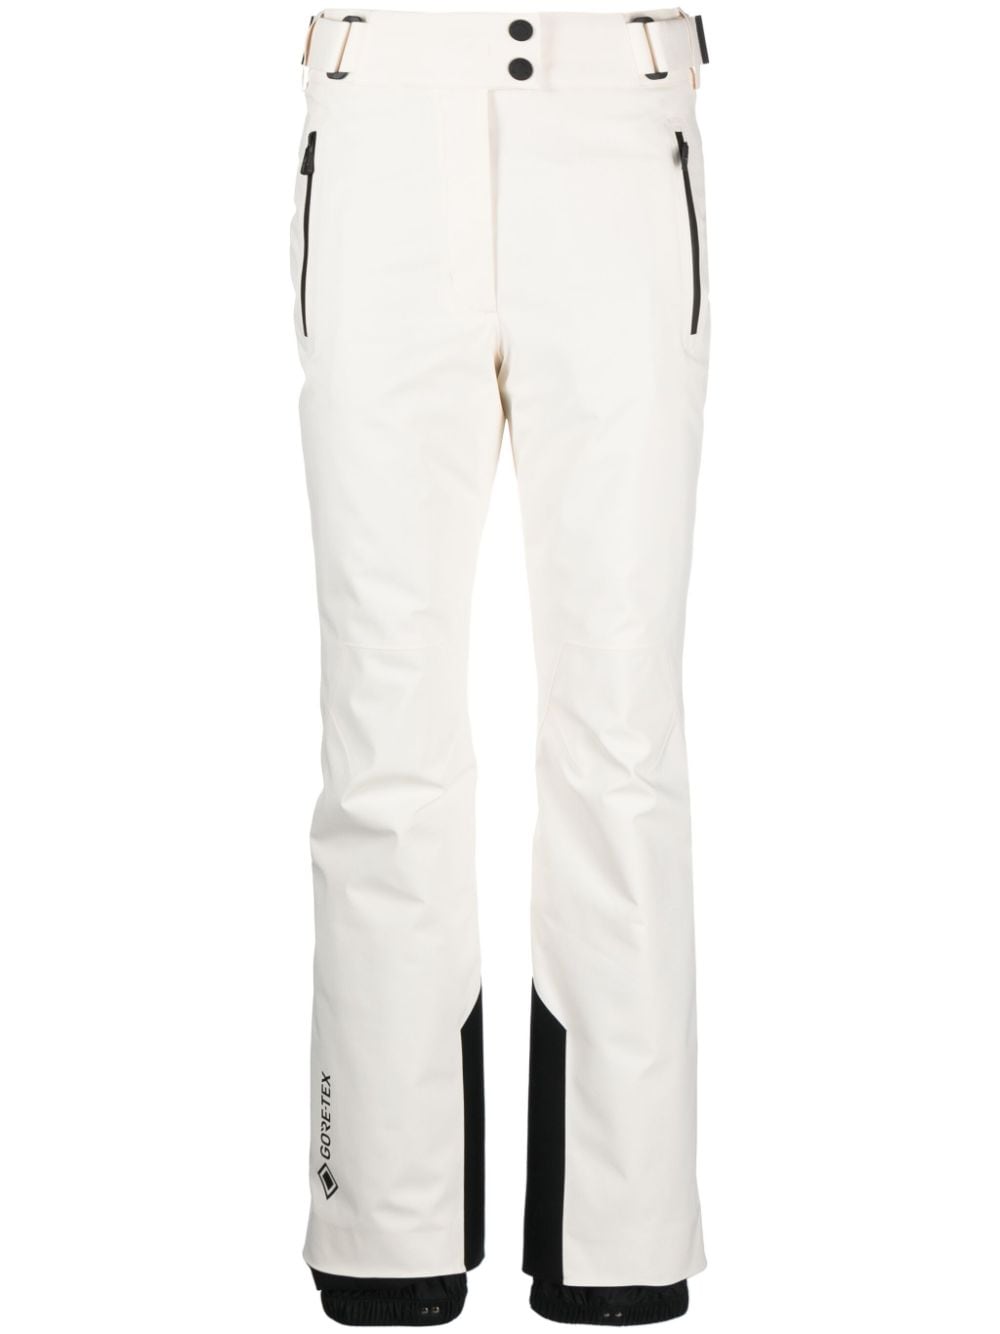 Moncler Grenoble Ski Trousers In White